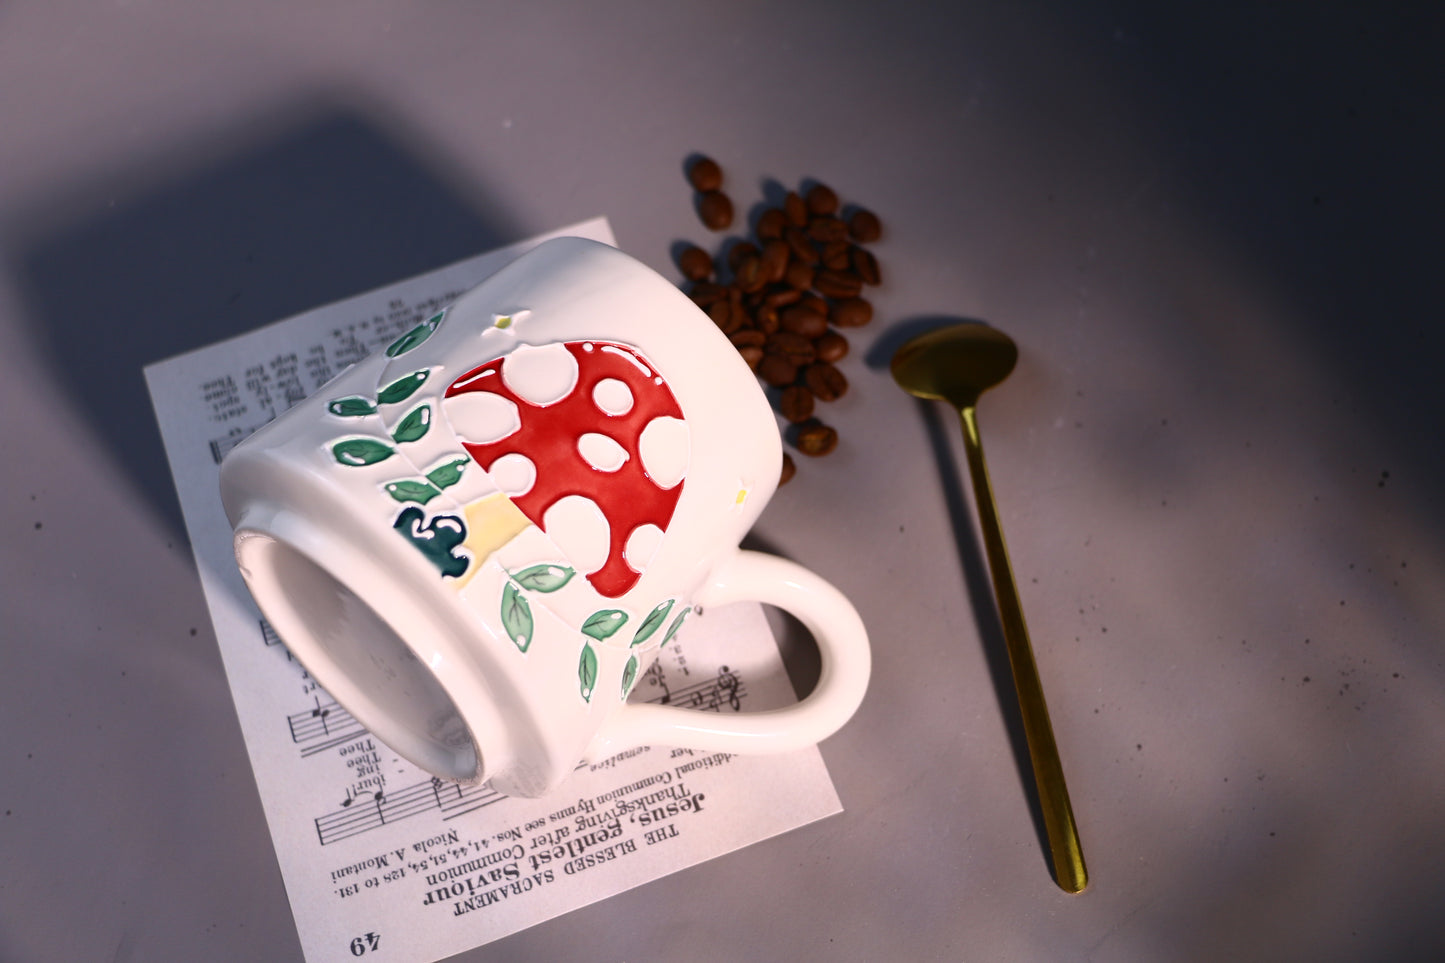 Mushroom Ceramic Coffee Mug, Personalized Handmade Pottery Cup for Gifts